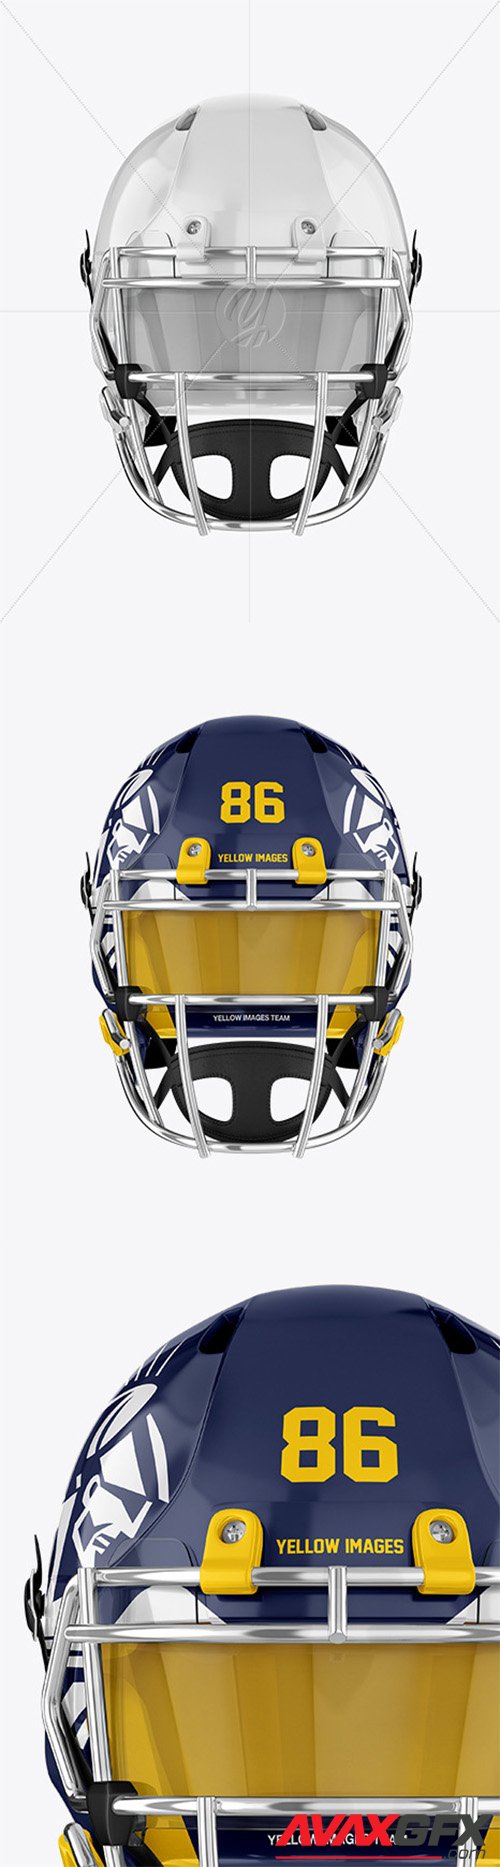 Download American Football Helmet Mockup - Front View 59488 ...